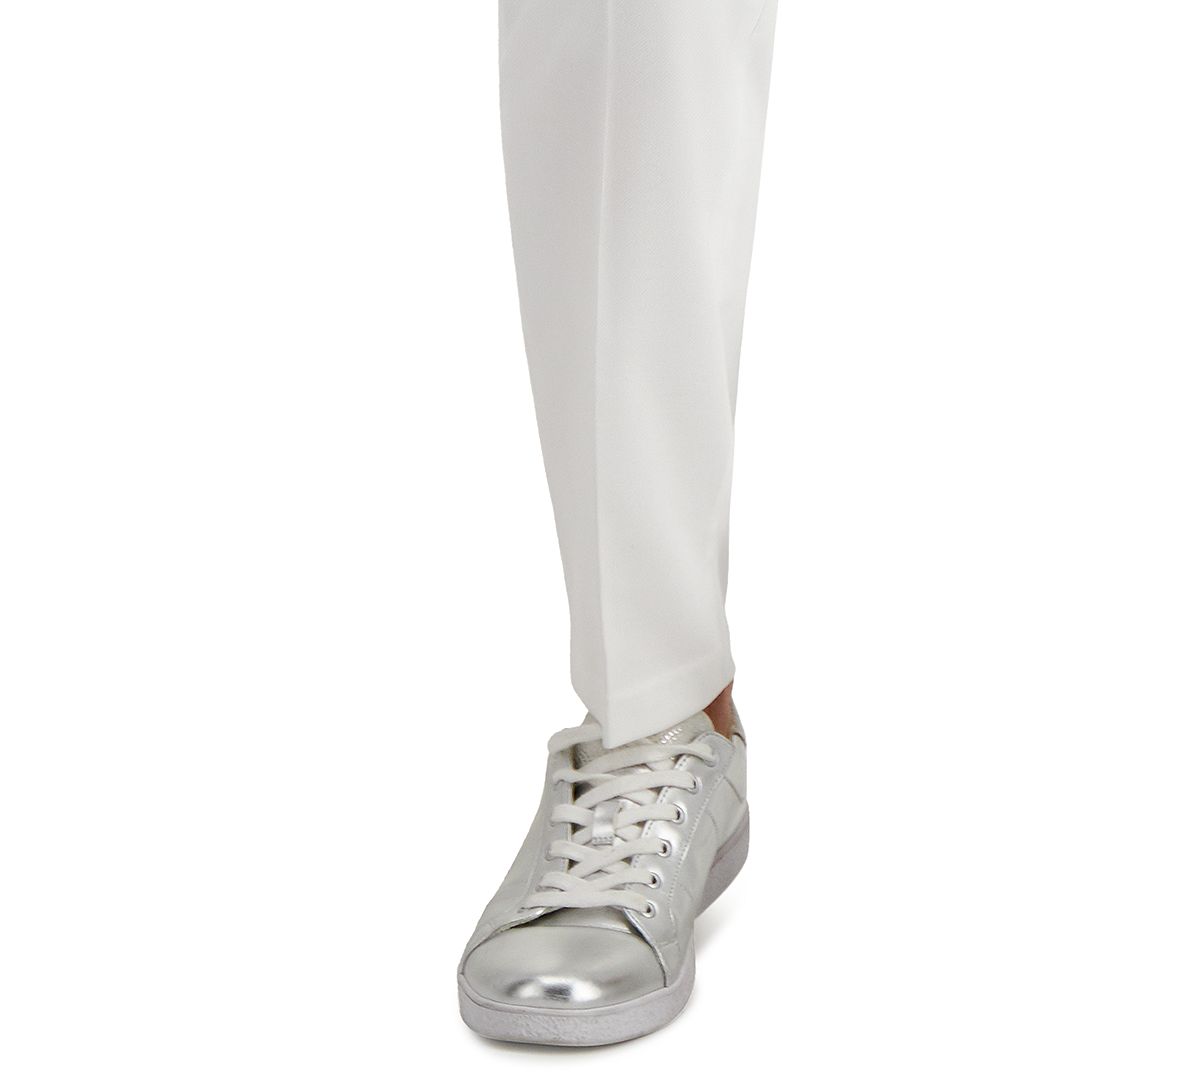 Inc International Concepts Inc Slim-fit Stretch White Solid Suit Pants White Pure